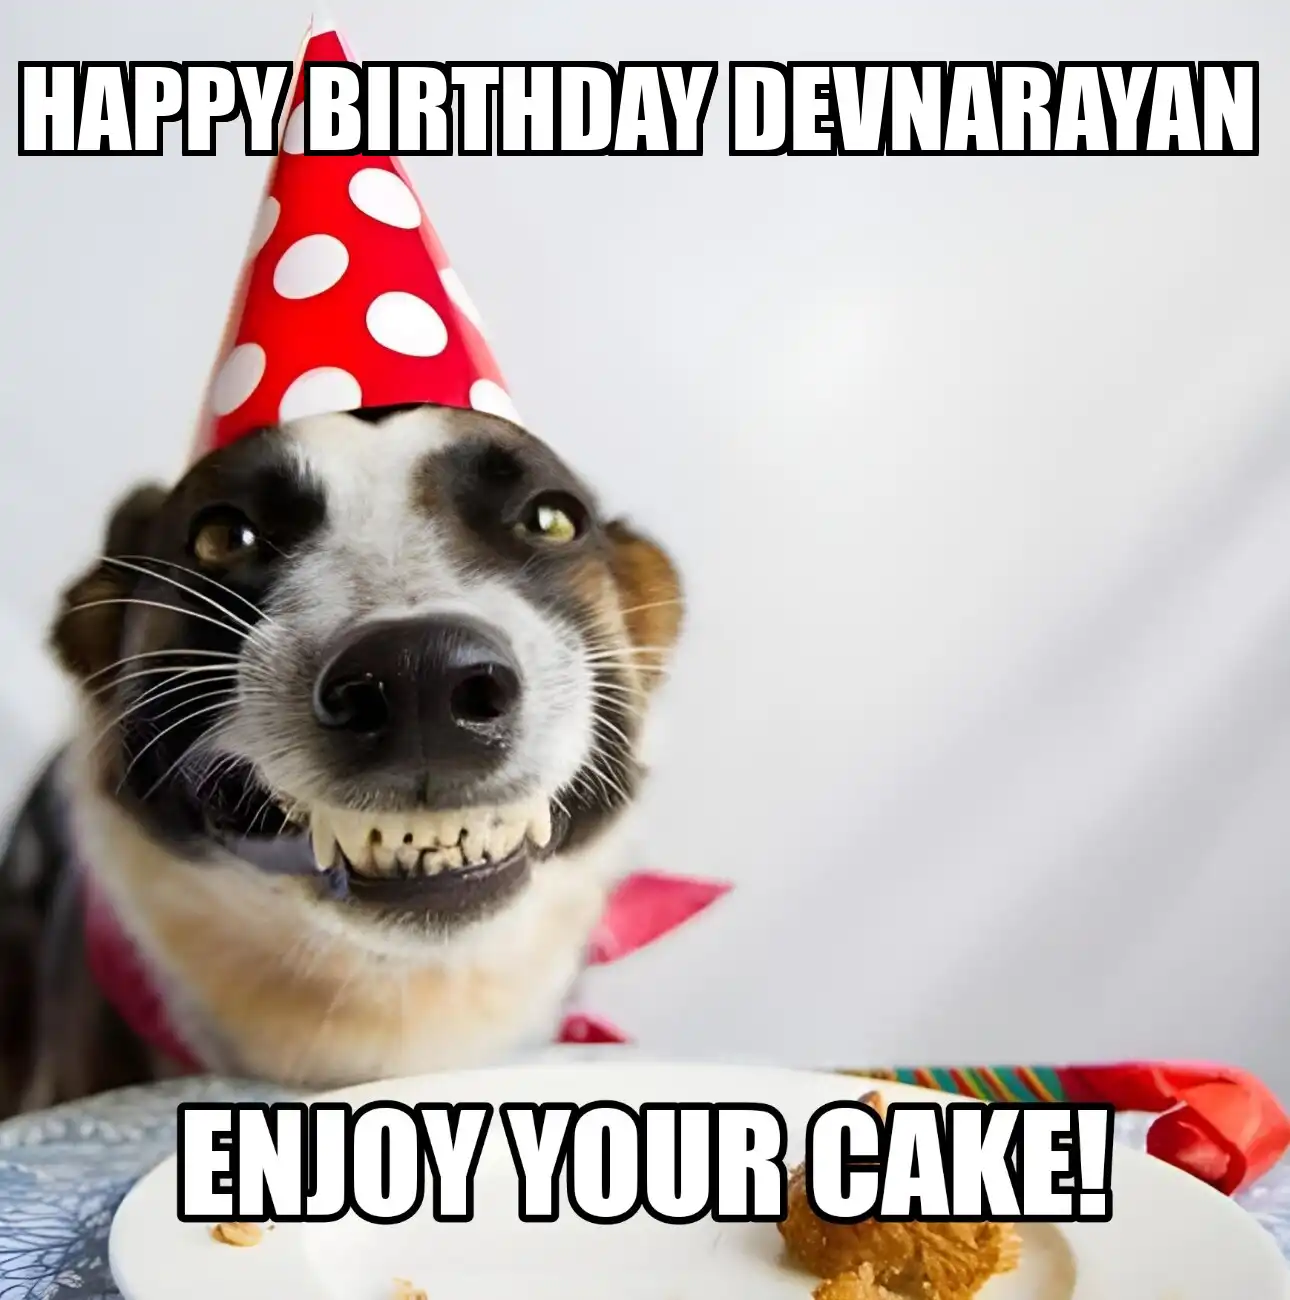 Happy Birthday Devnarayan Enjoy Your Cake Dog Meme